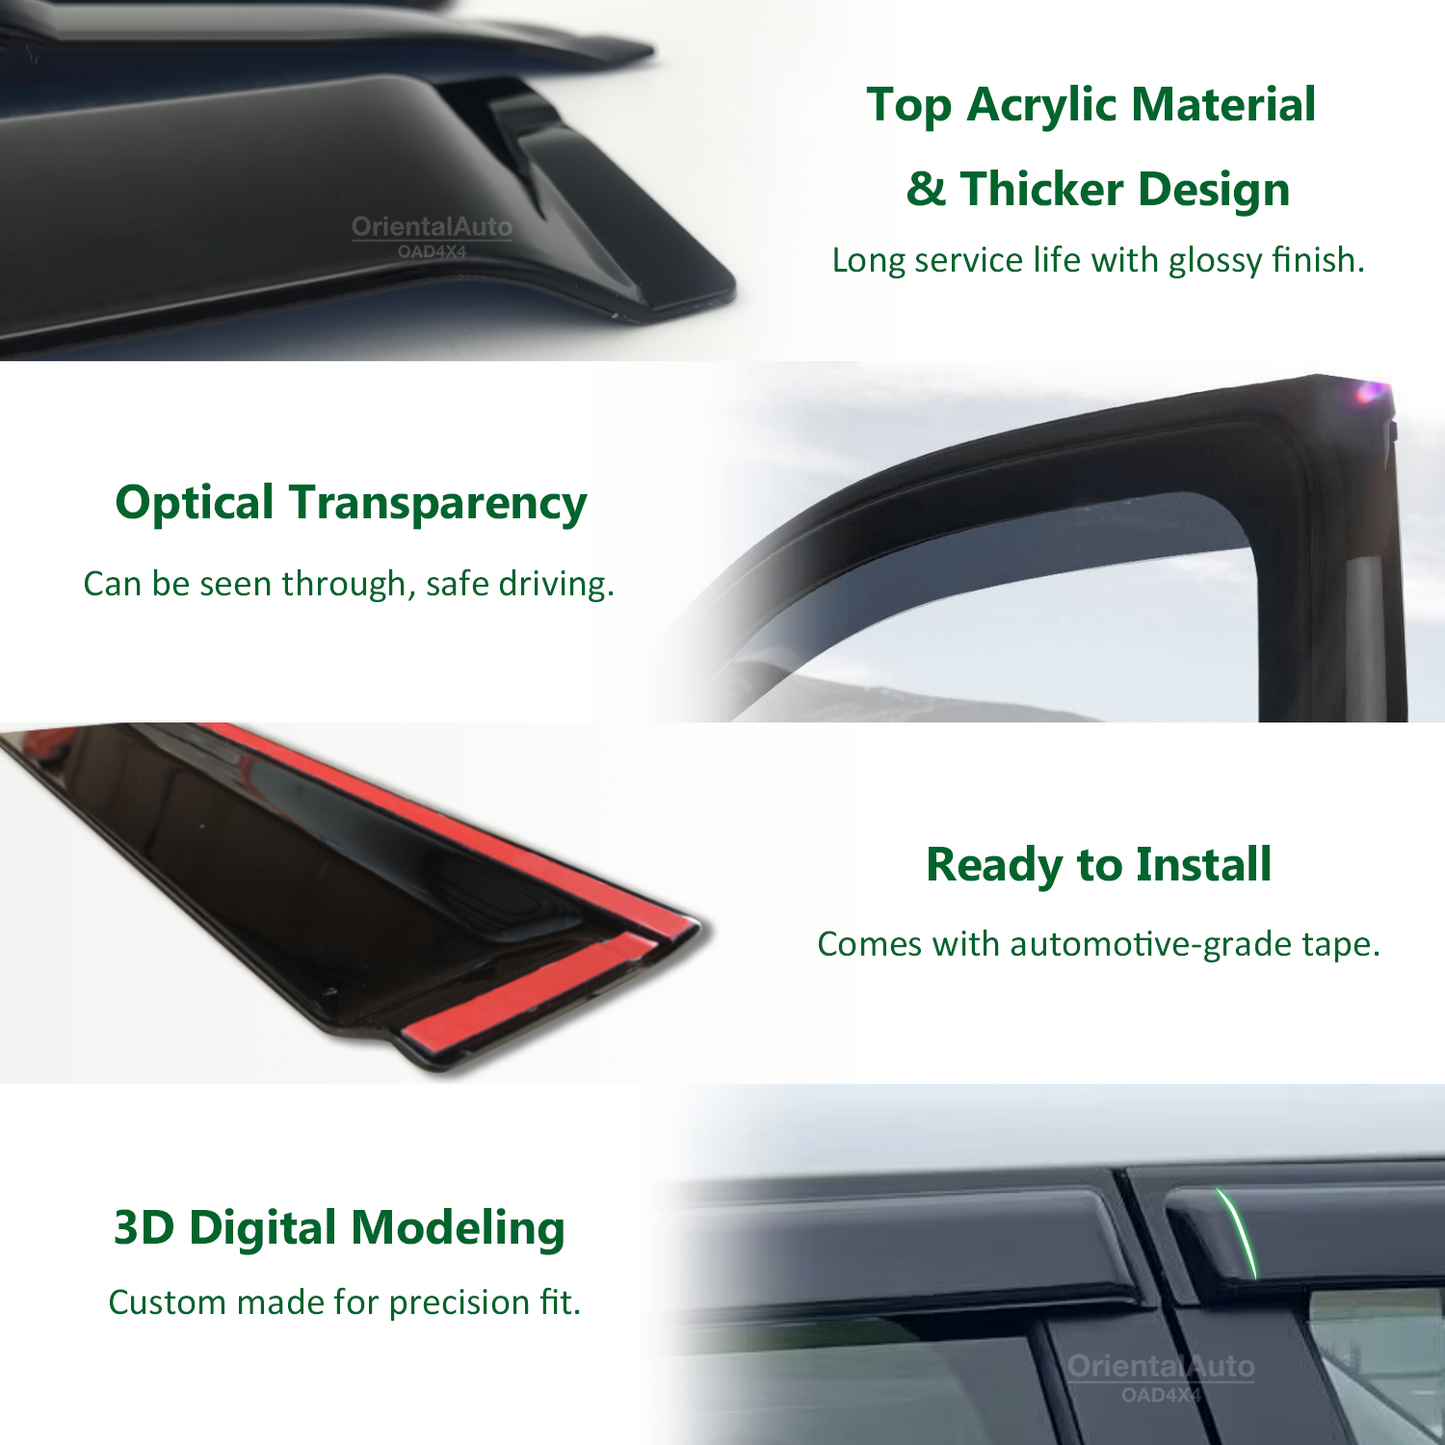 Luxury Weathershields & 3D TPE Cargo Mat for BMW X5 G05 2018-Onwards Weather Shields Window Visor Boot Mat